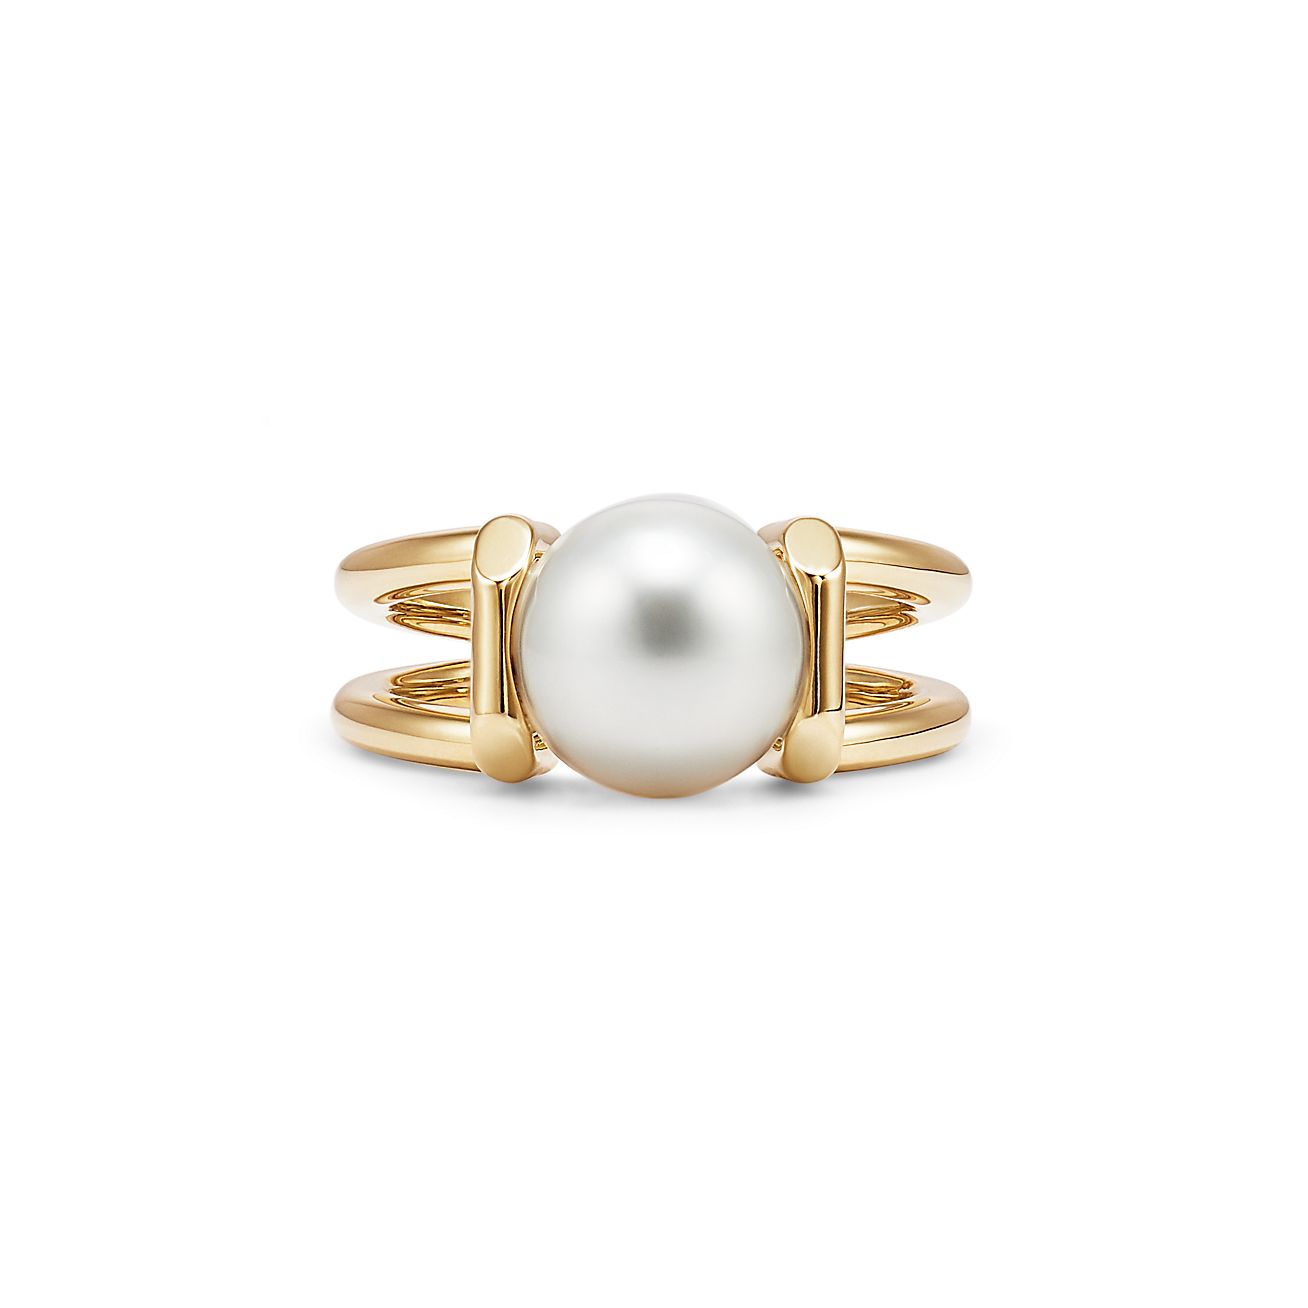 Tiffany HardWear South Sea pearl ring in 18k gold.